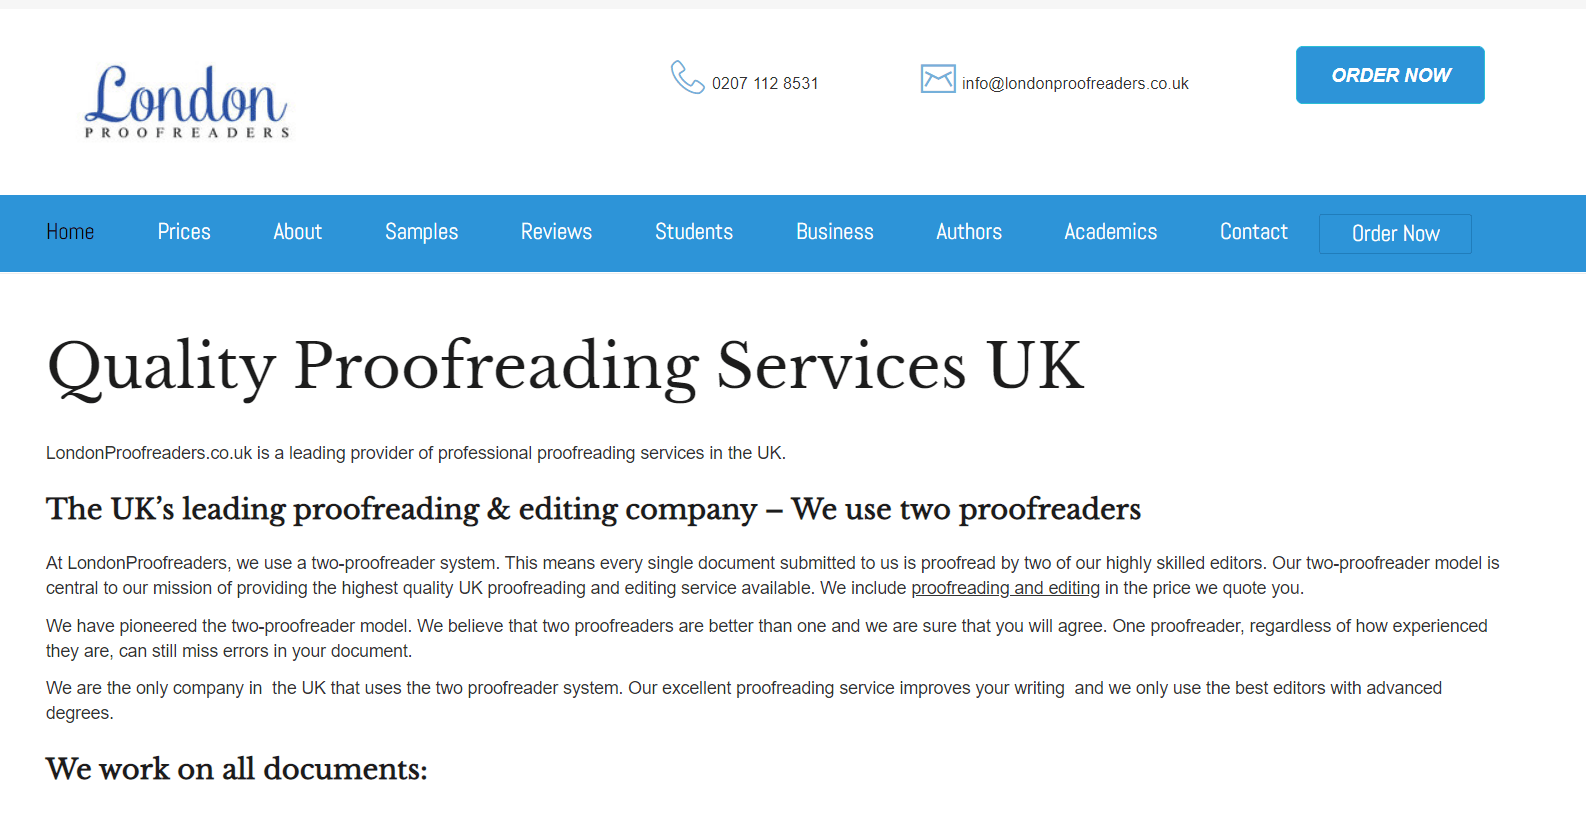 londonproofreaders.co.uk